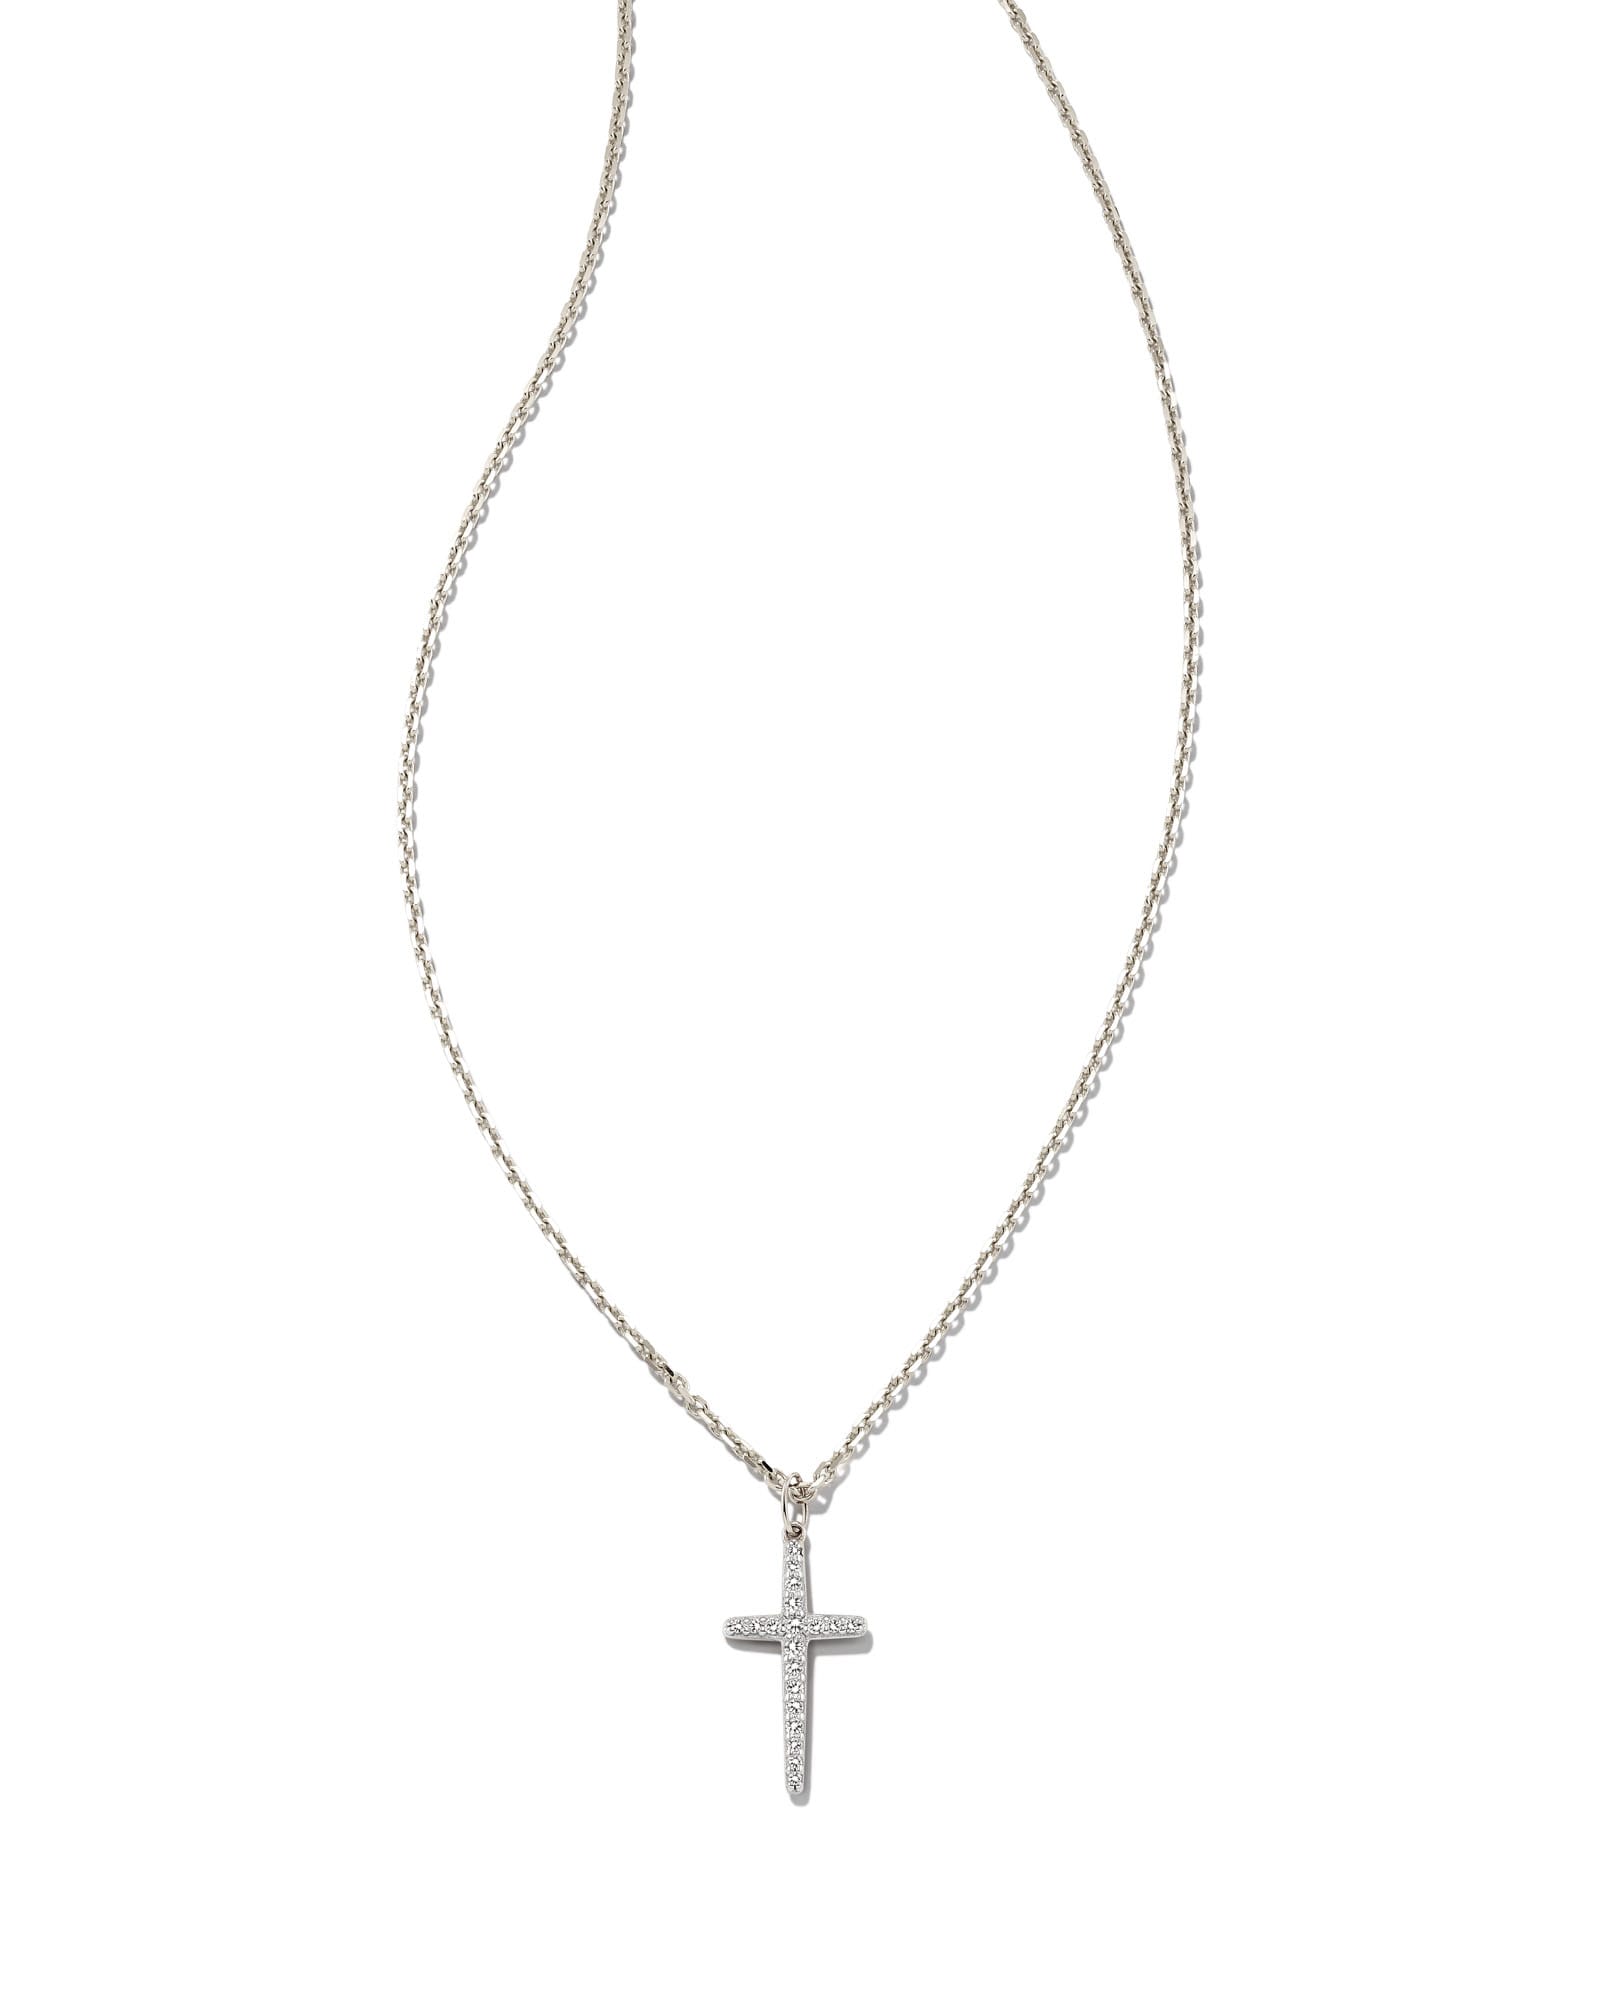 Kendra Scott Medium Cross 14k White Gold Pendant Necklace in White Diamond | Diamonds